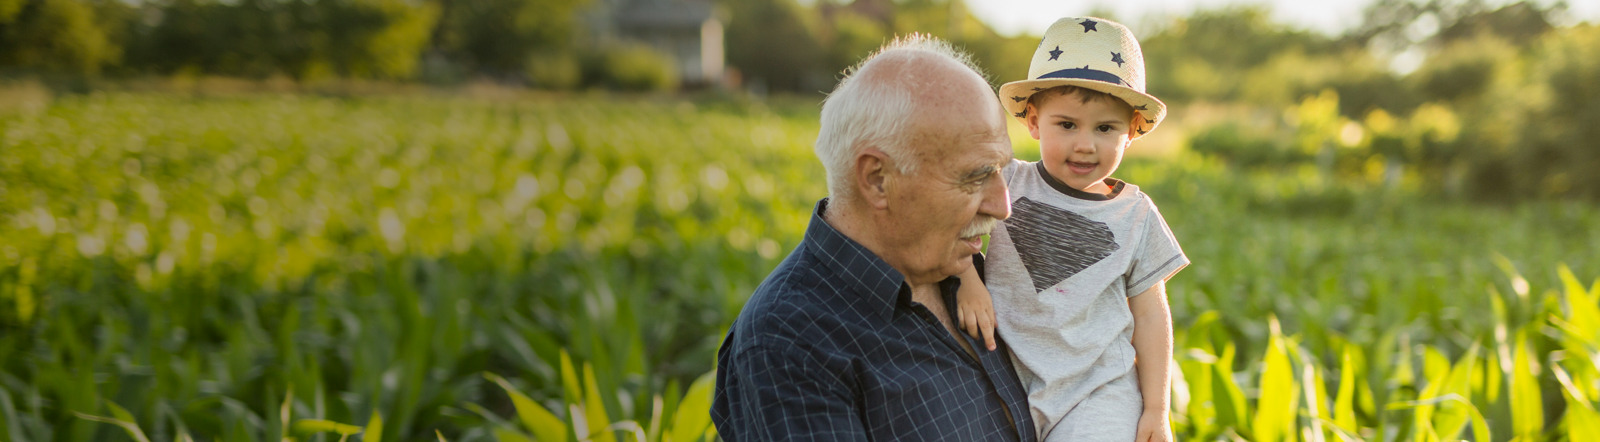 elderly man holds grandchild in a field